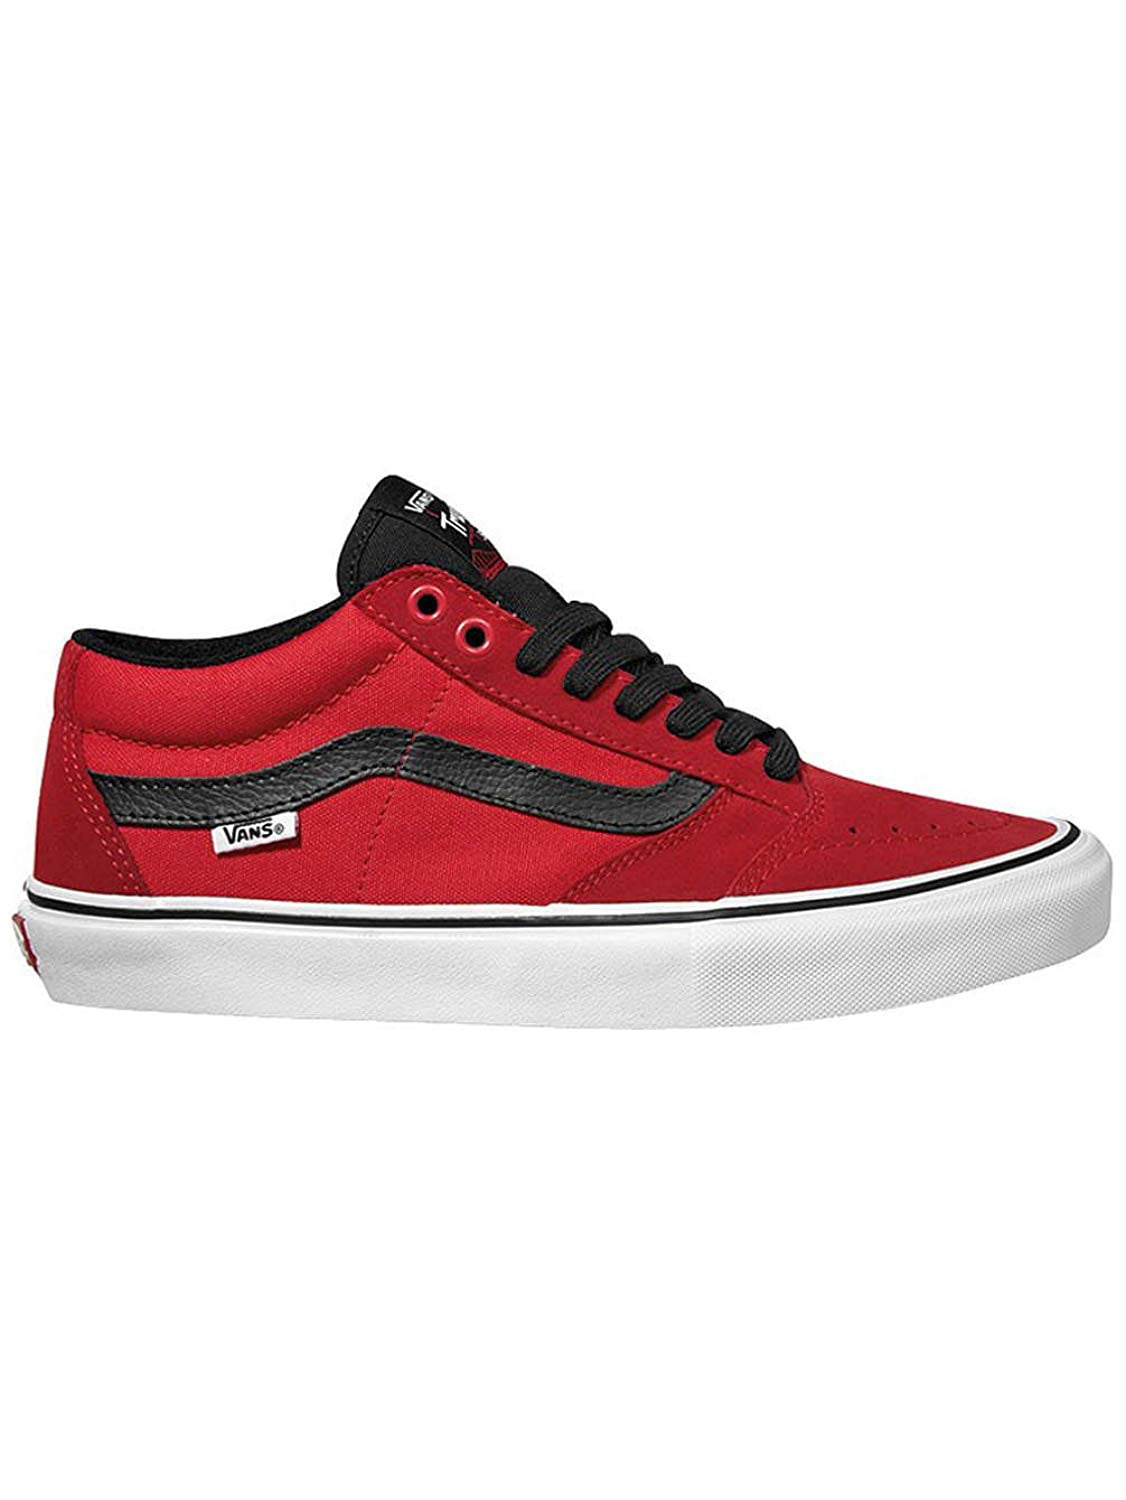 Vans - Vans TNT SG Bright Red/Black/White Men's Classic Skate Shoes Size 7  - Walmart.com - Walmart.com